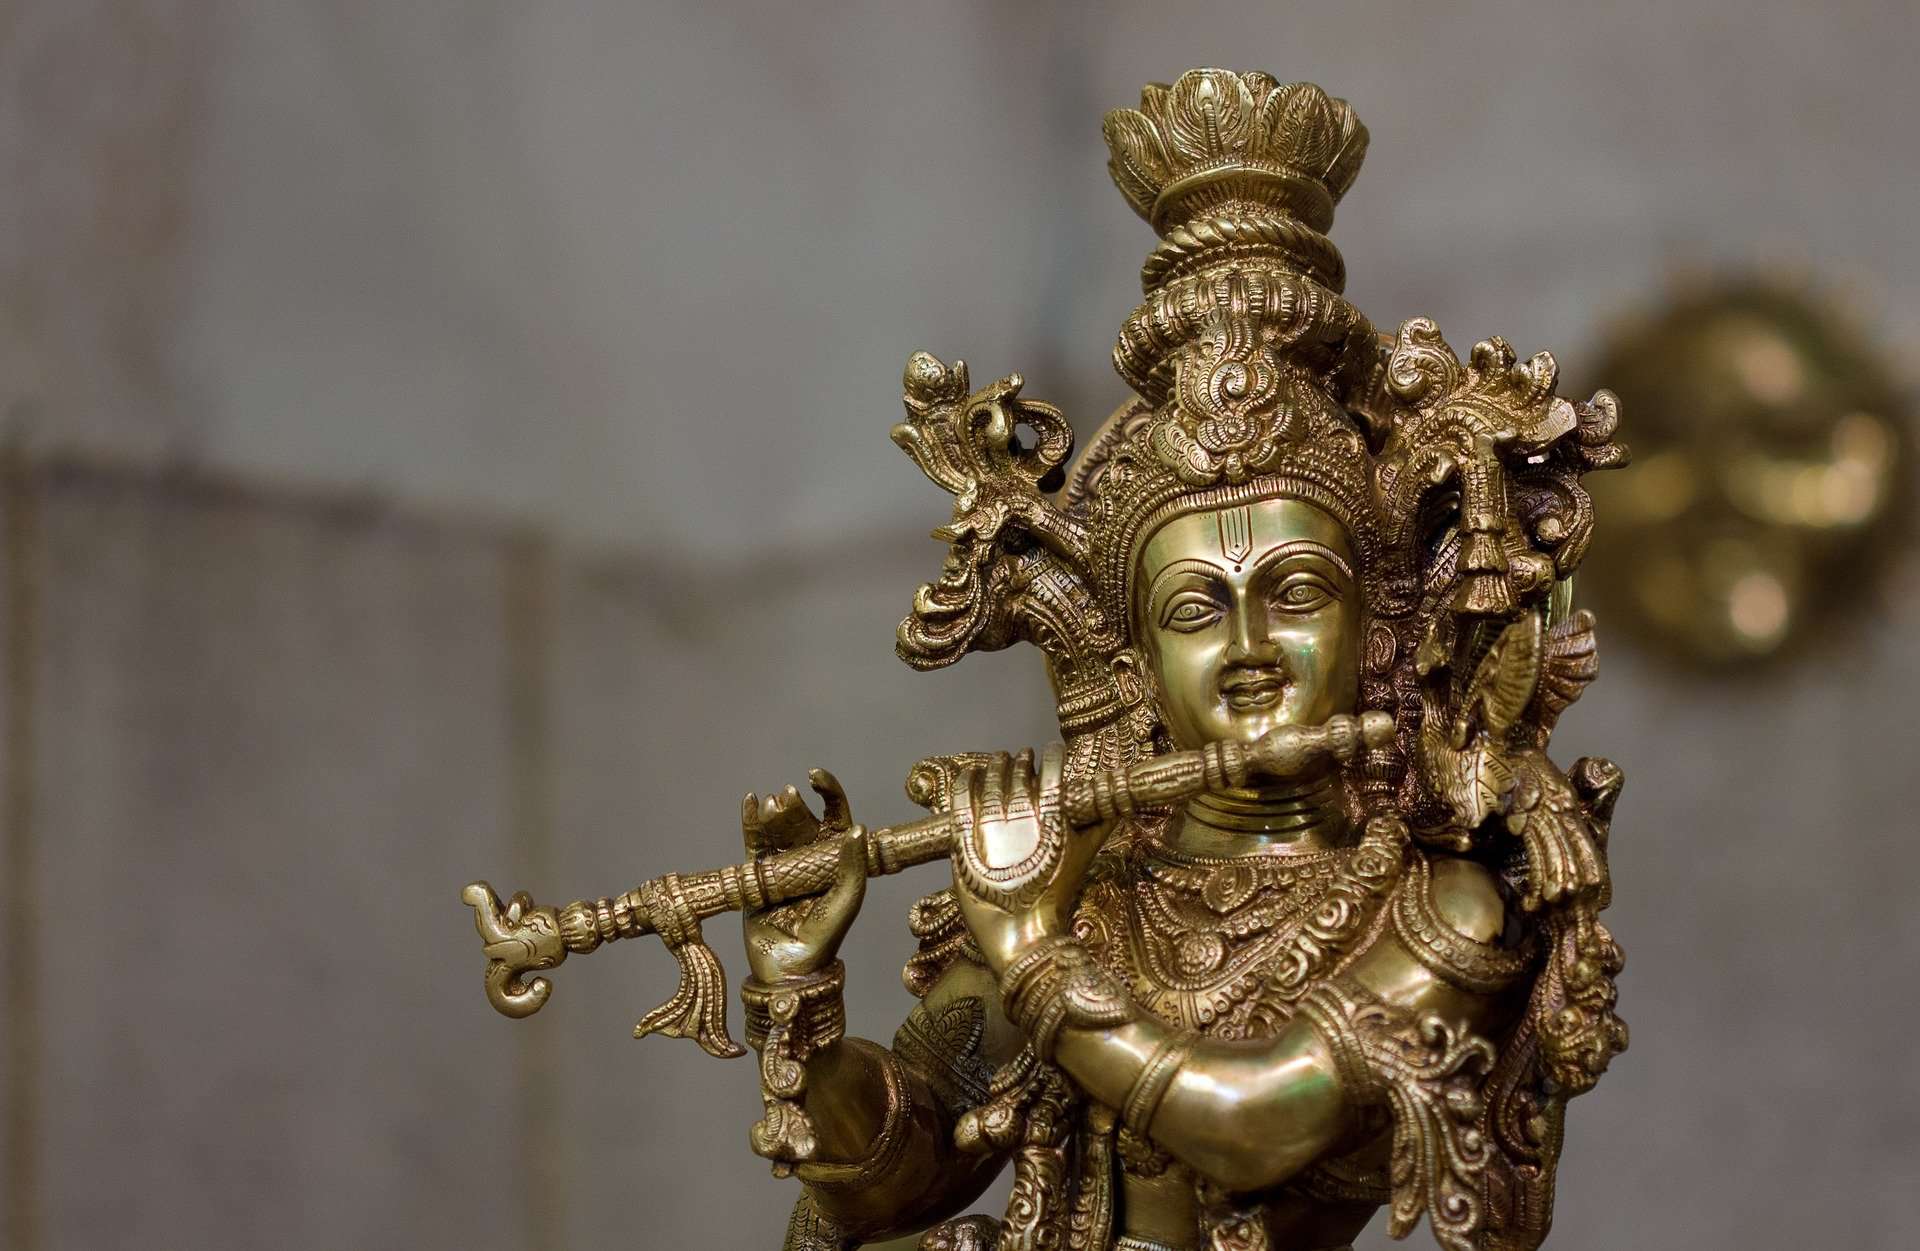 Who killed Lord Krishna?